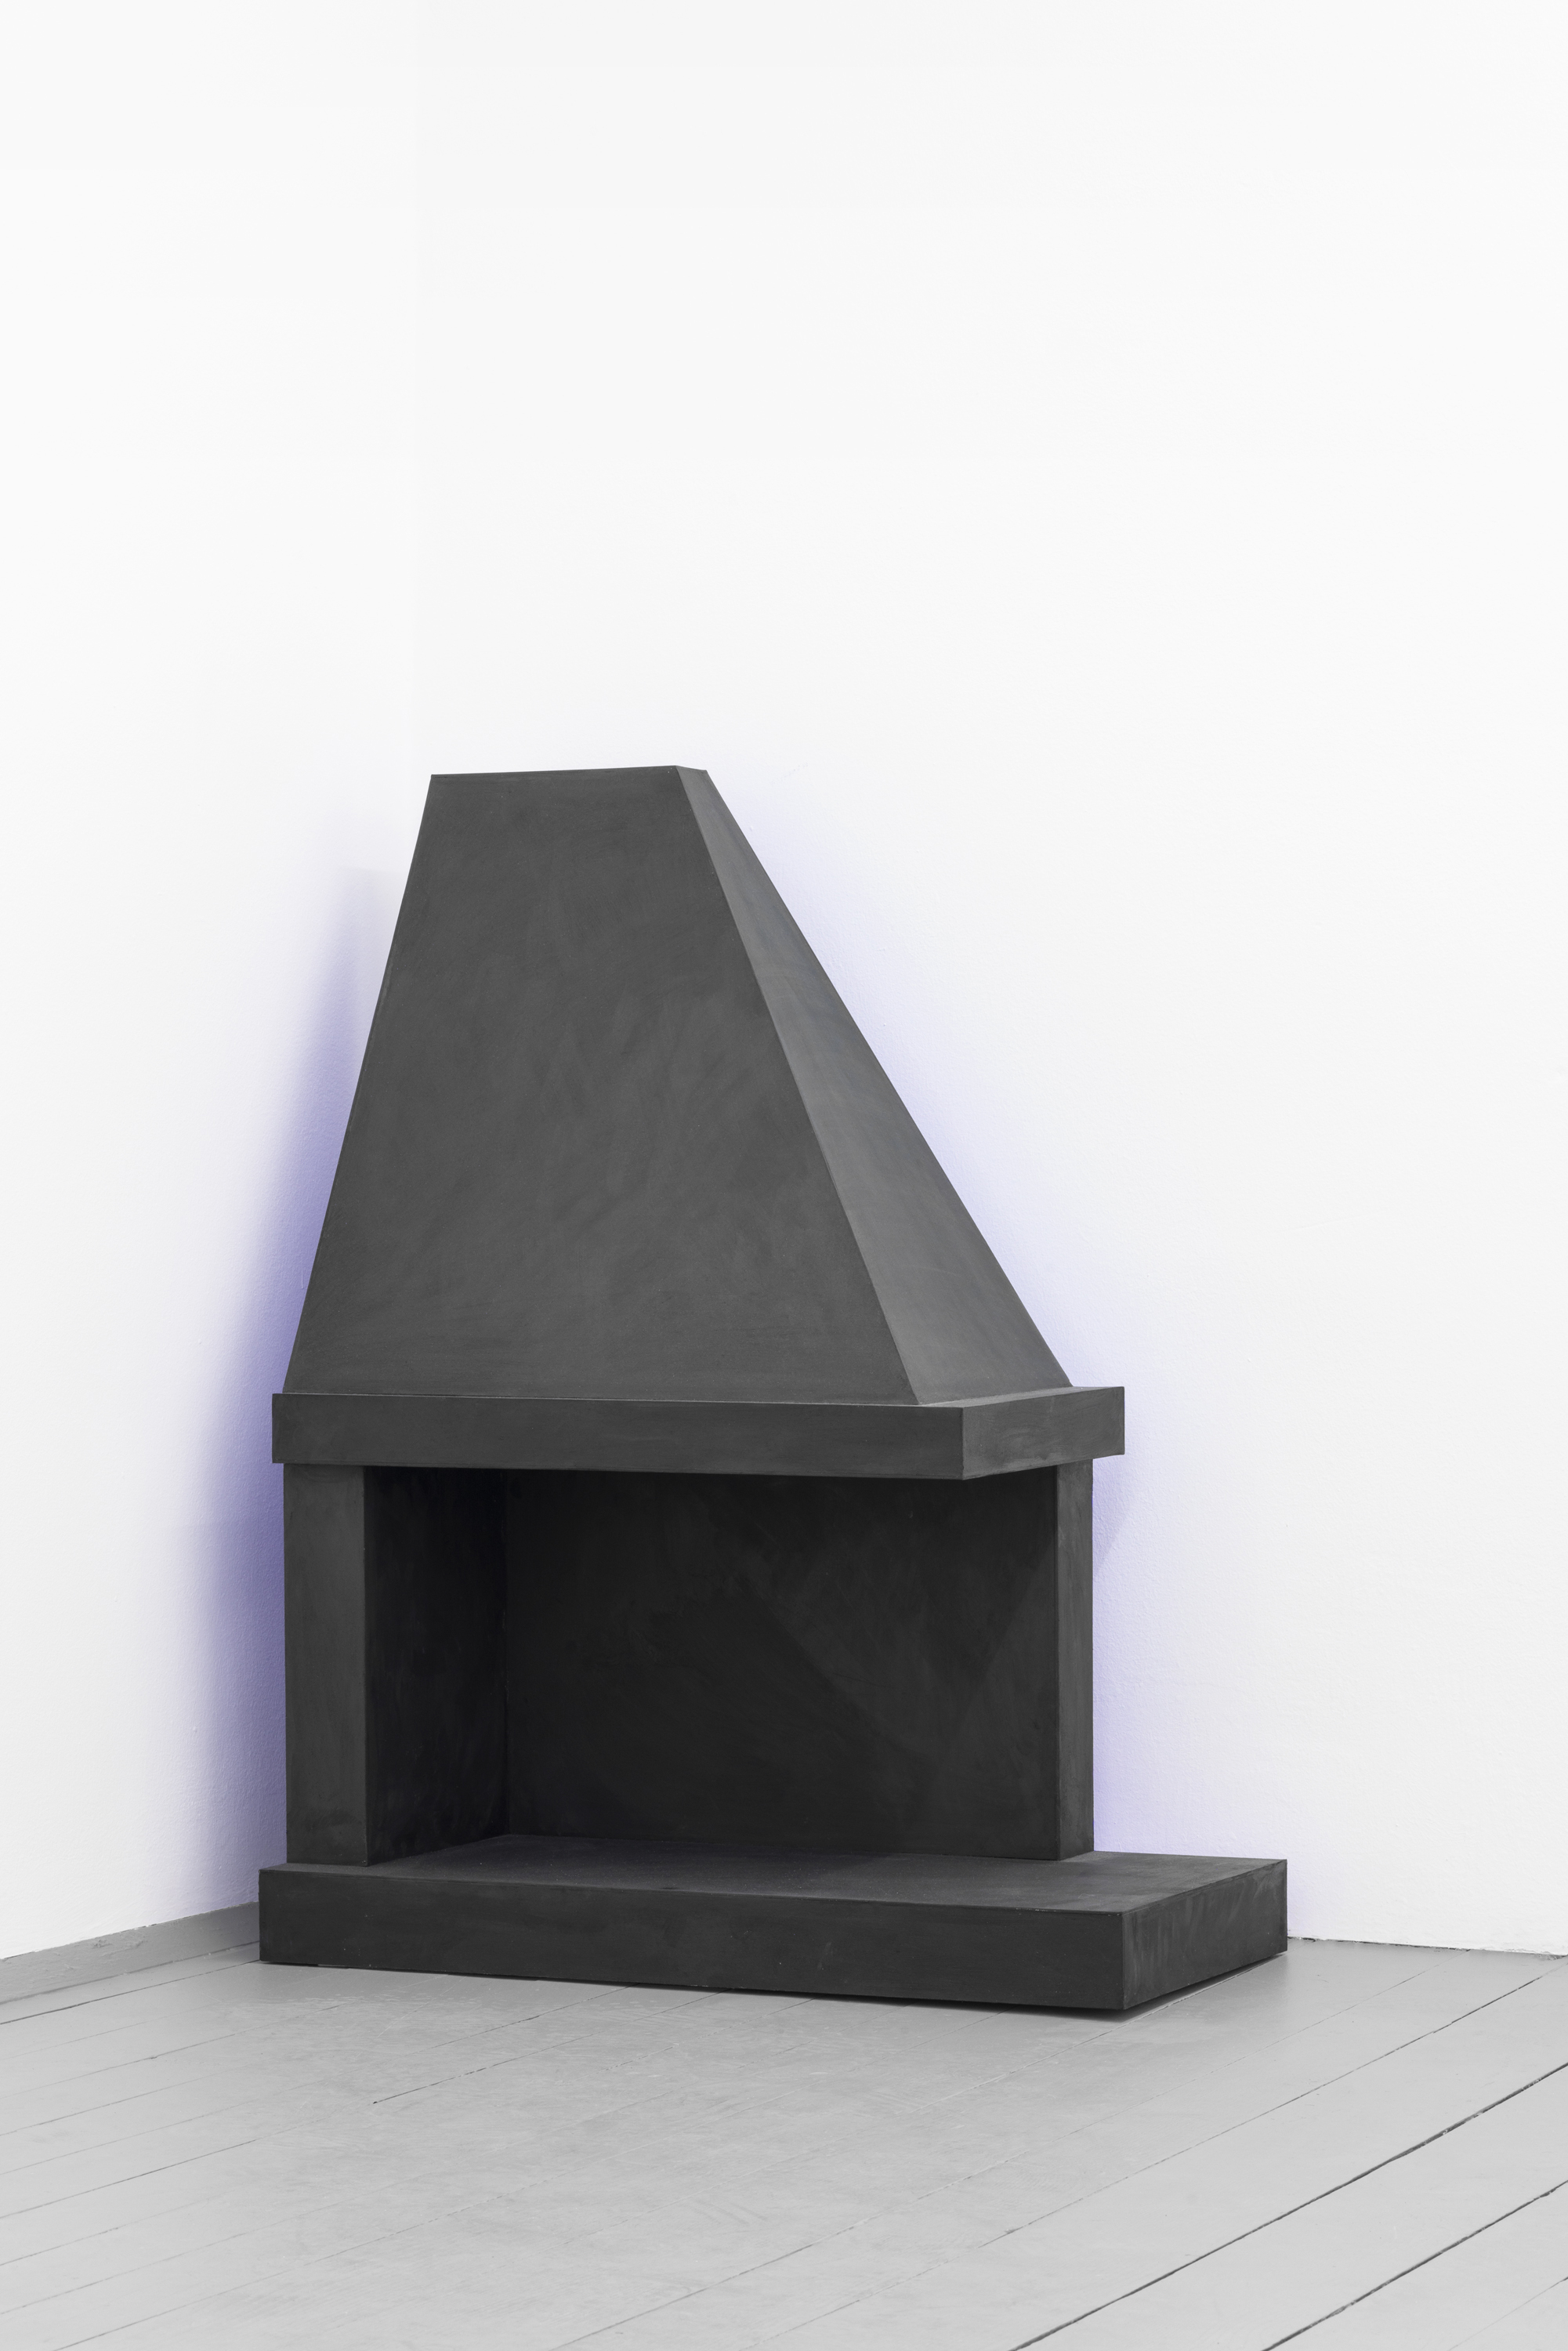 Kerstin von Gabain, Fireplace, 2022, cardboard, oil paint, 95 x 72 x 36 cm